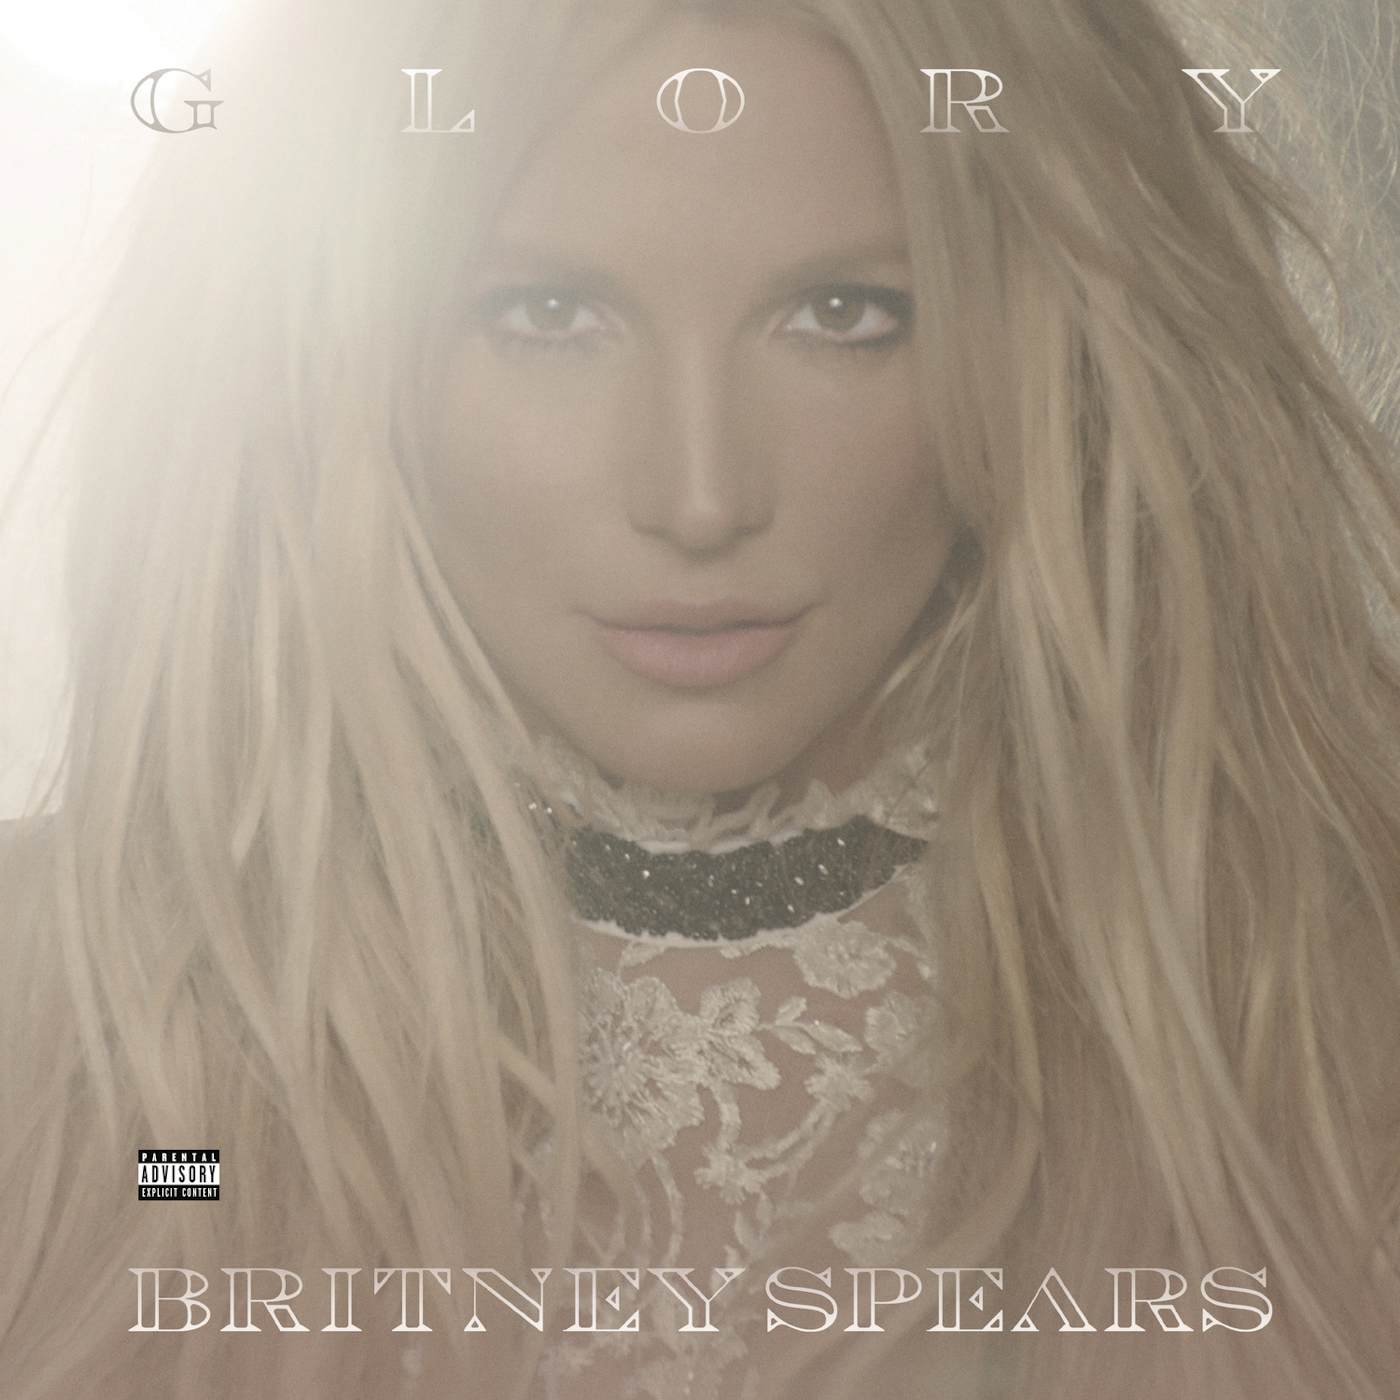 Britney Spears Glory Vinyl Record